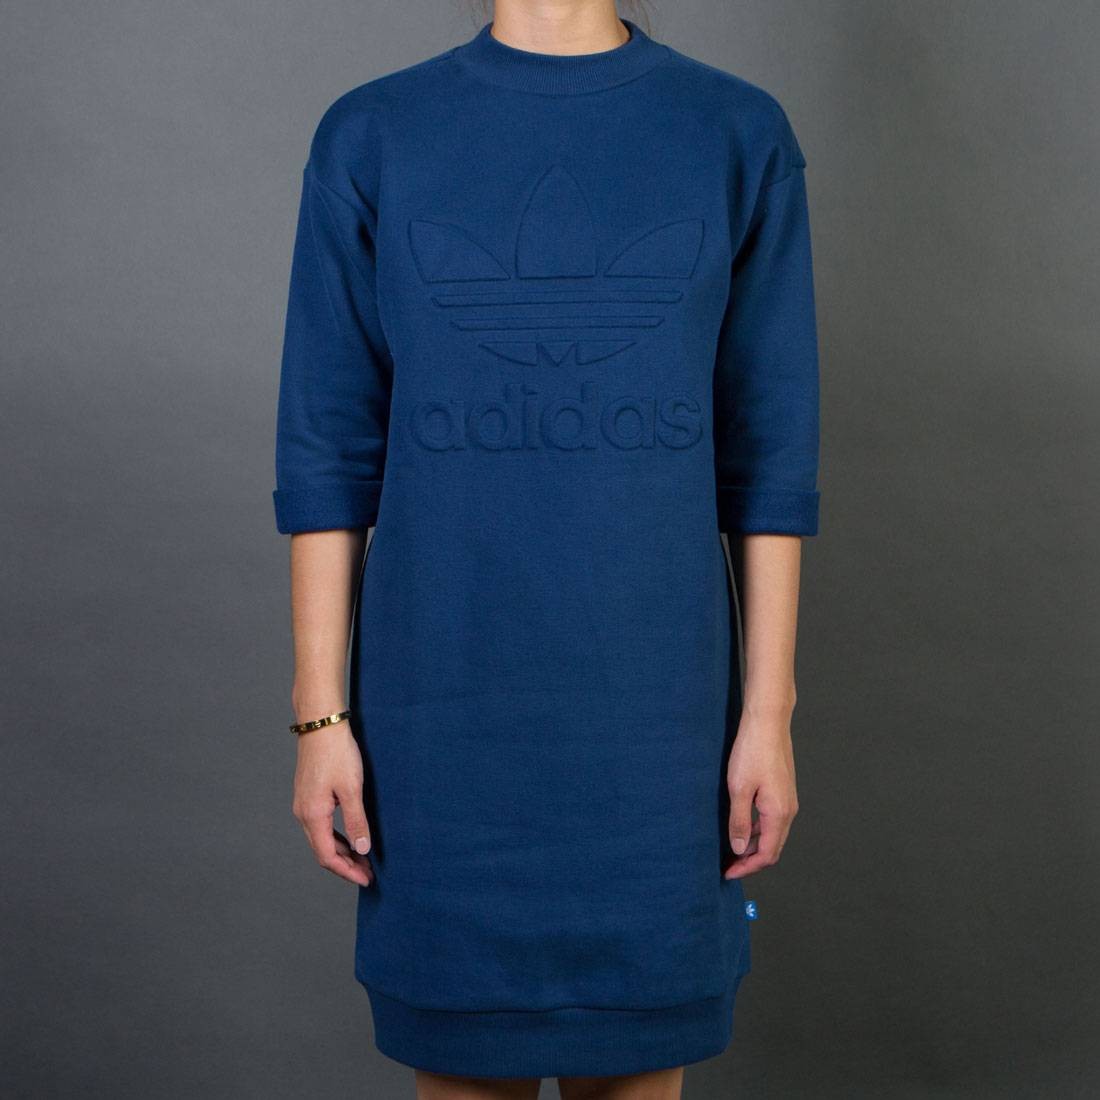 Adidas Women Sweat Dress (blue / mystery blue)